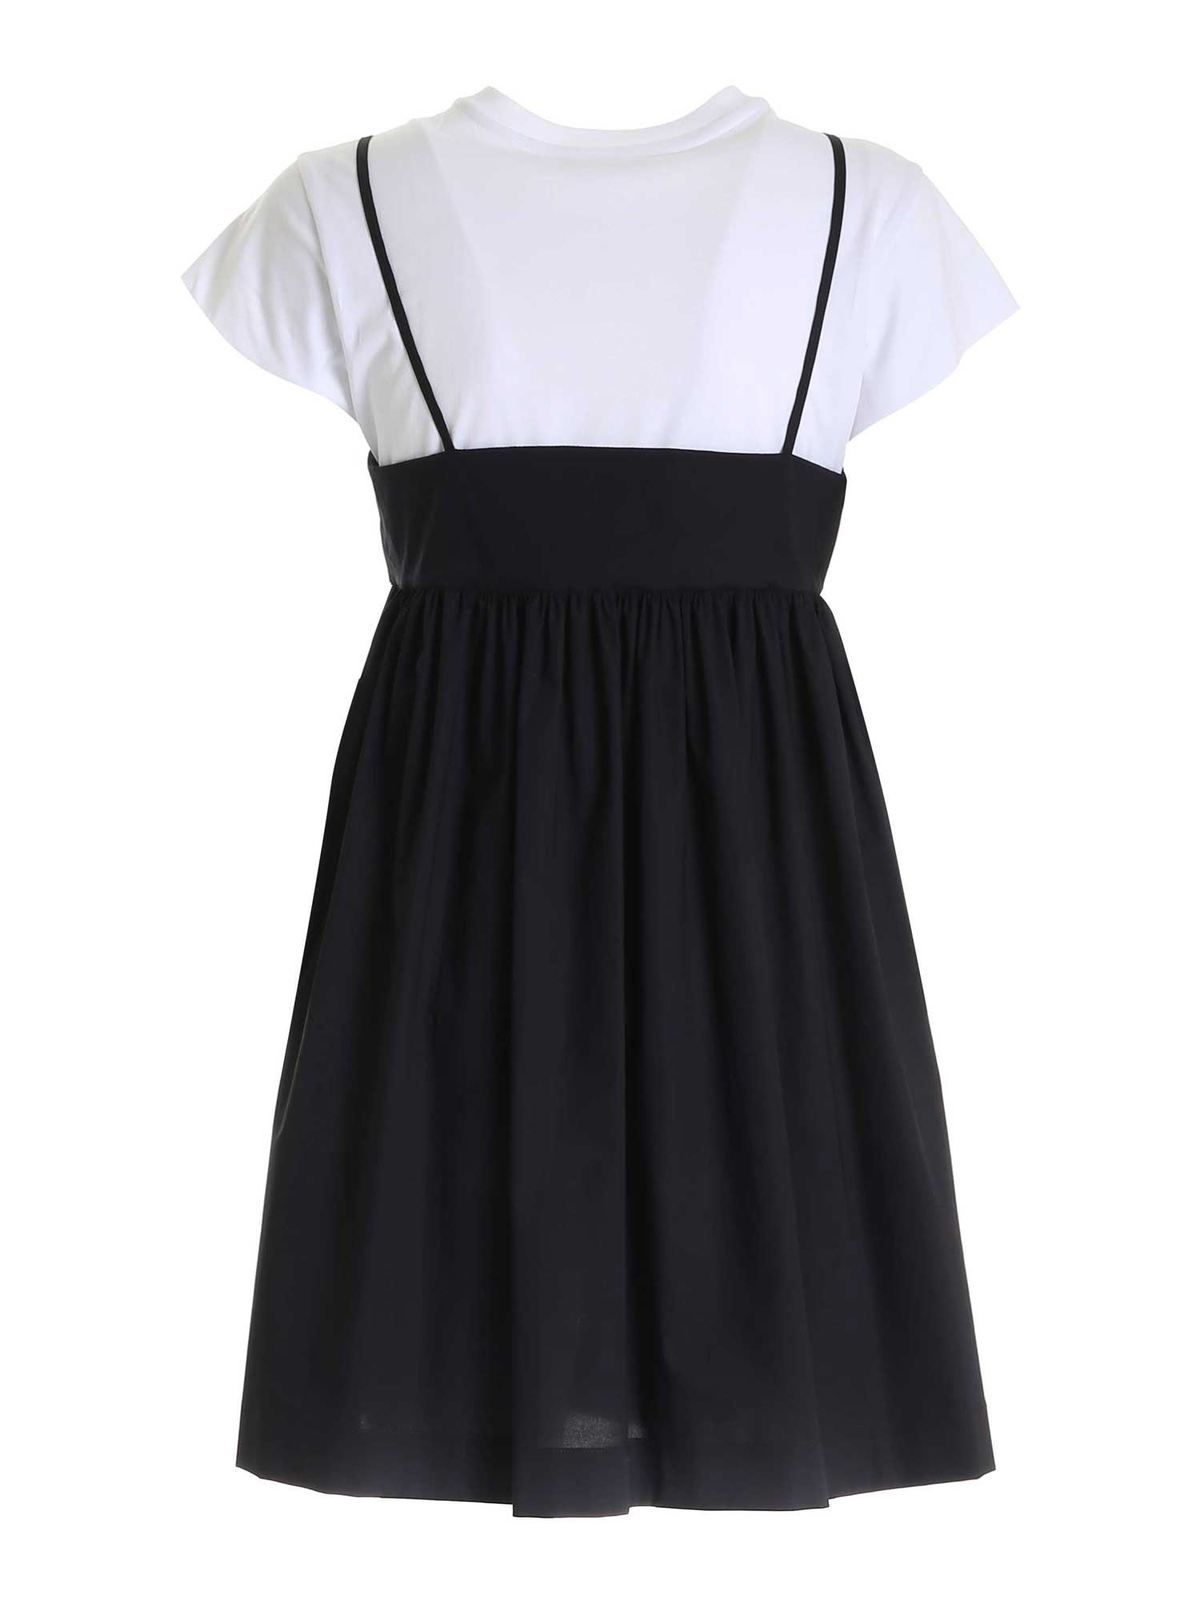 Shop Vivetta Embellished T-shirt Dress In Black And White